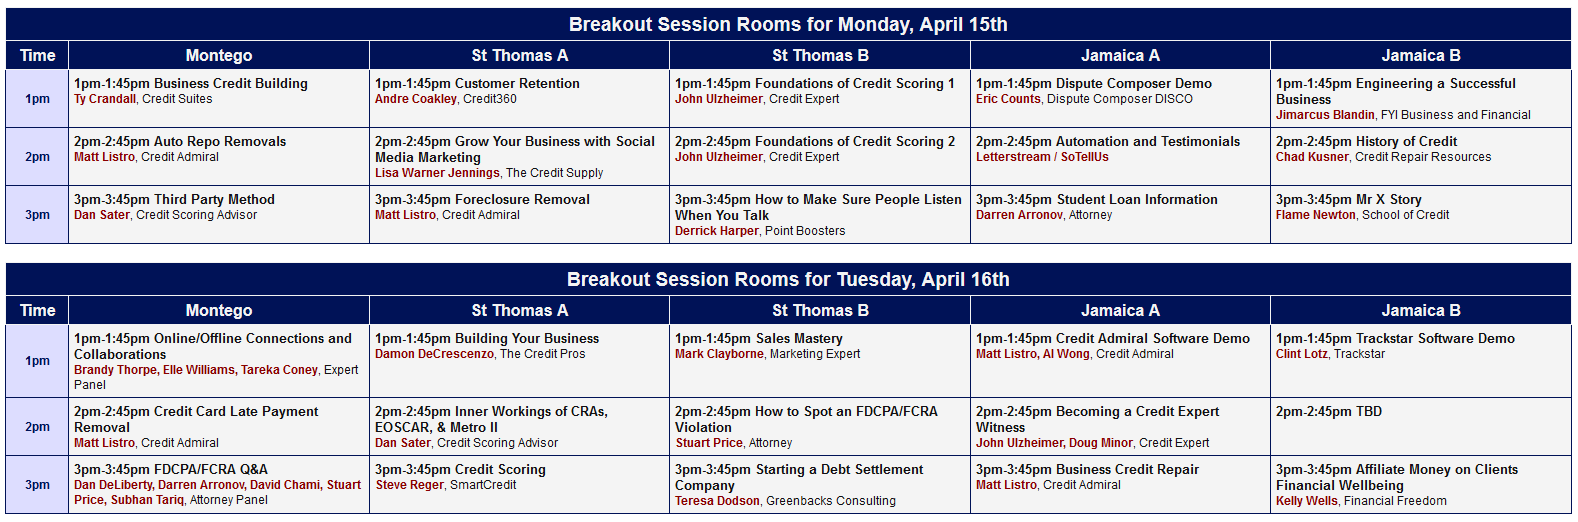 2019-04-09-breakout-schedule